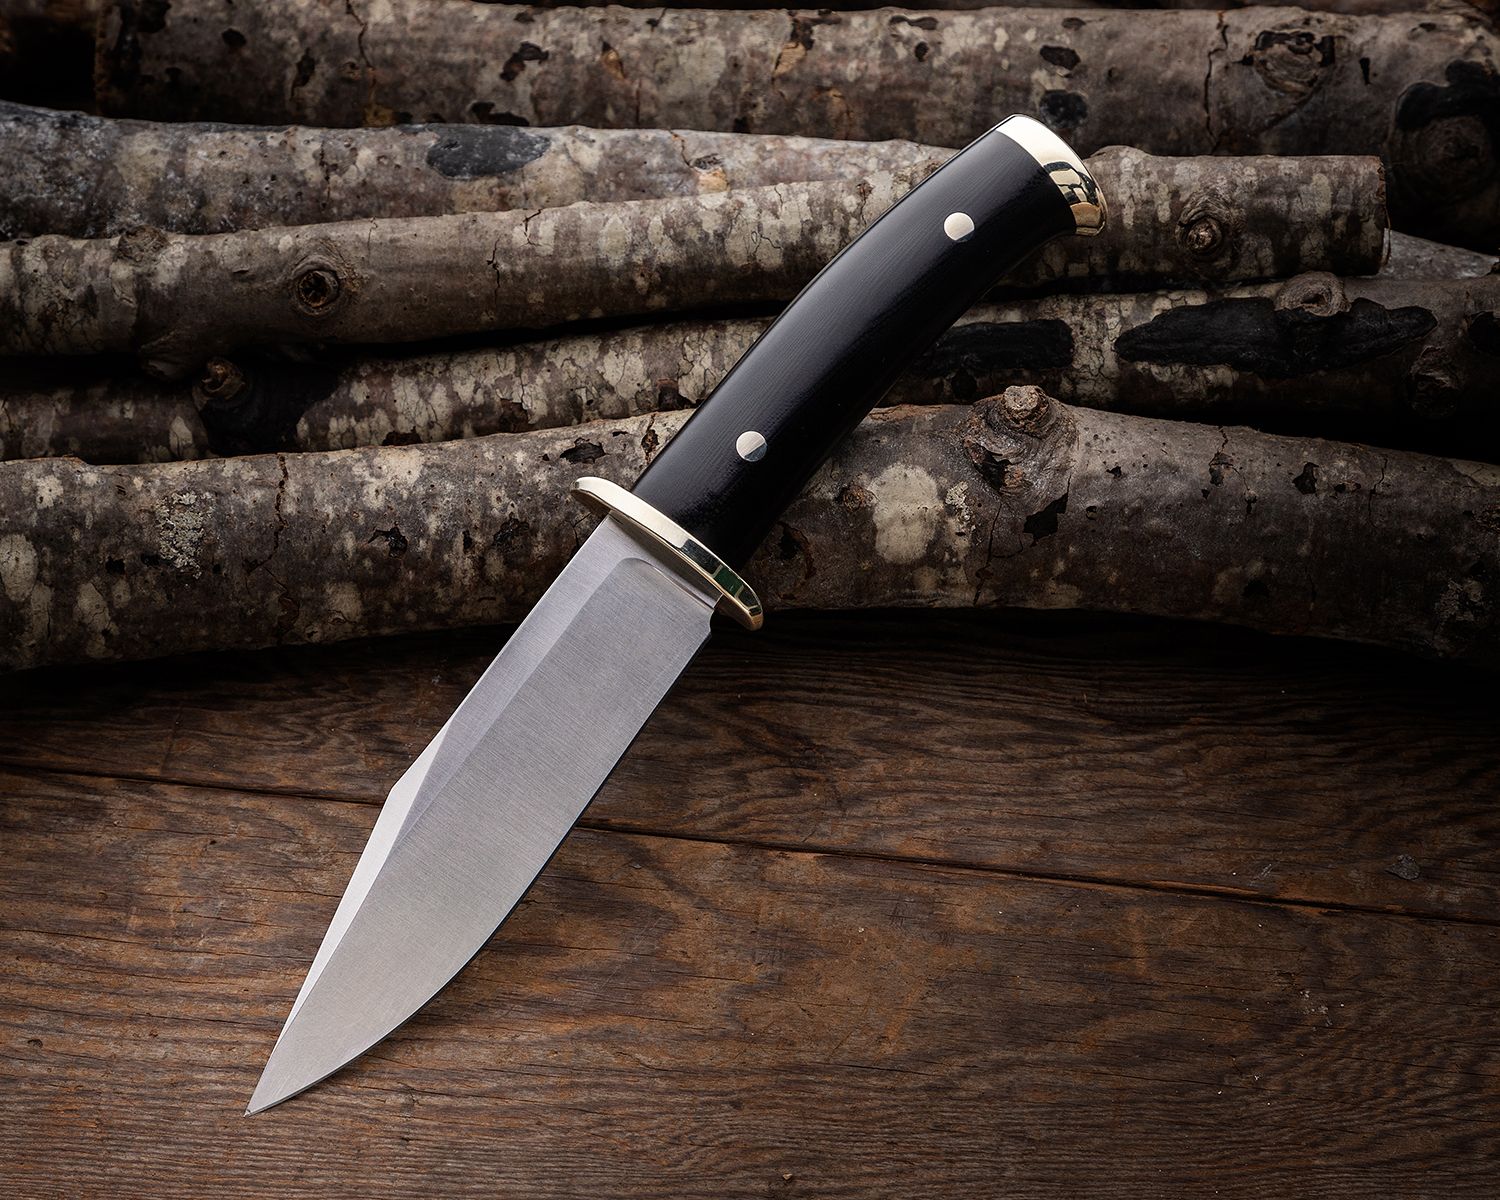 CIVIVI Knives Teton Tickler Blade Knife 5.45" D2 Satin Bowie Blade, Polished Black G10 Handles with Nickel Silver Guard and Pommel, Leather Sheath - KnifeCenter - C20072-1